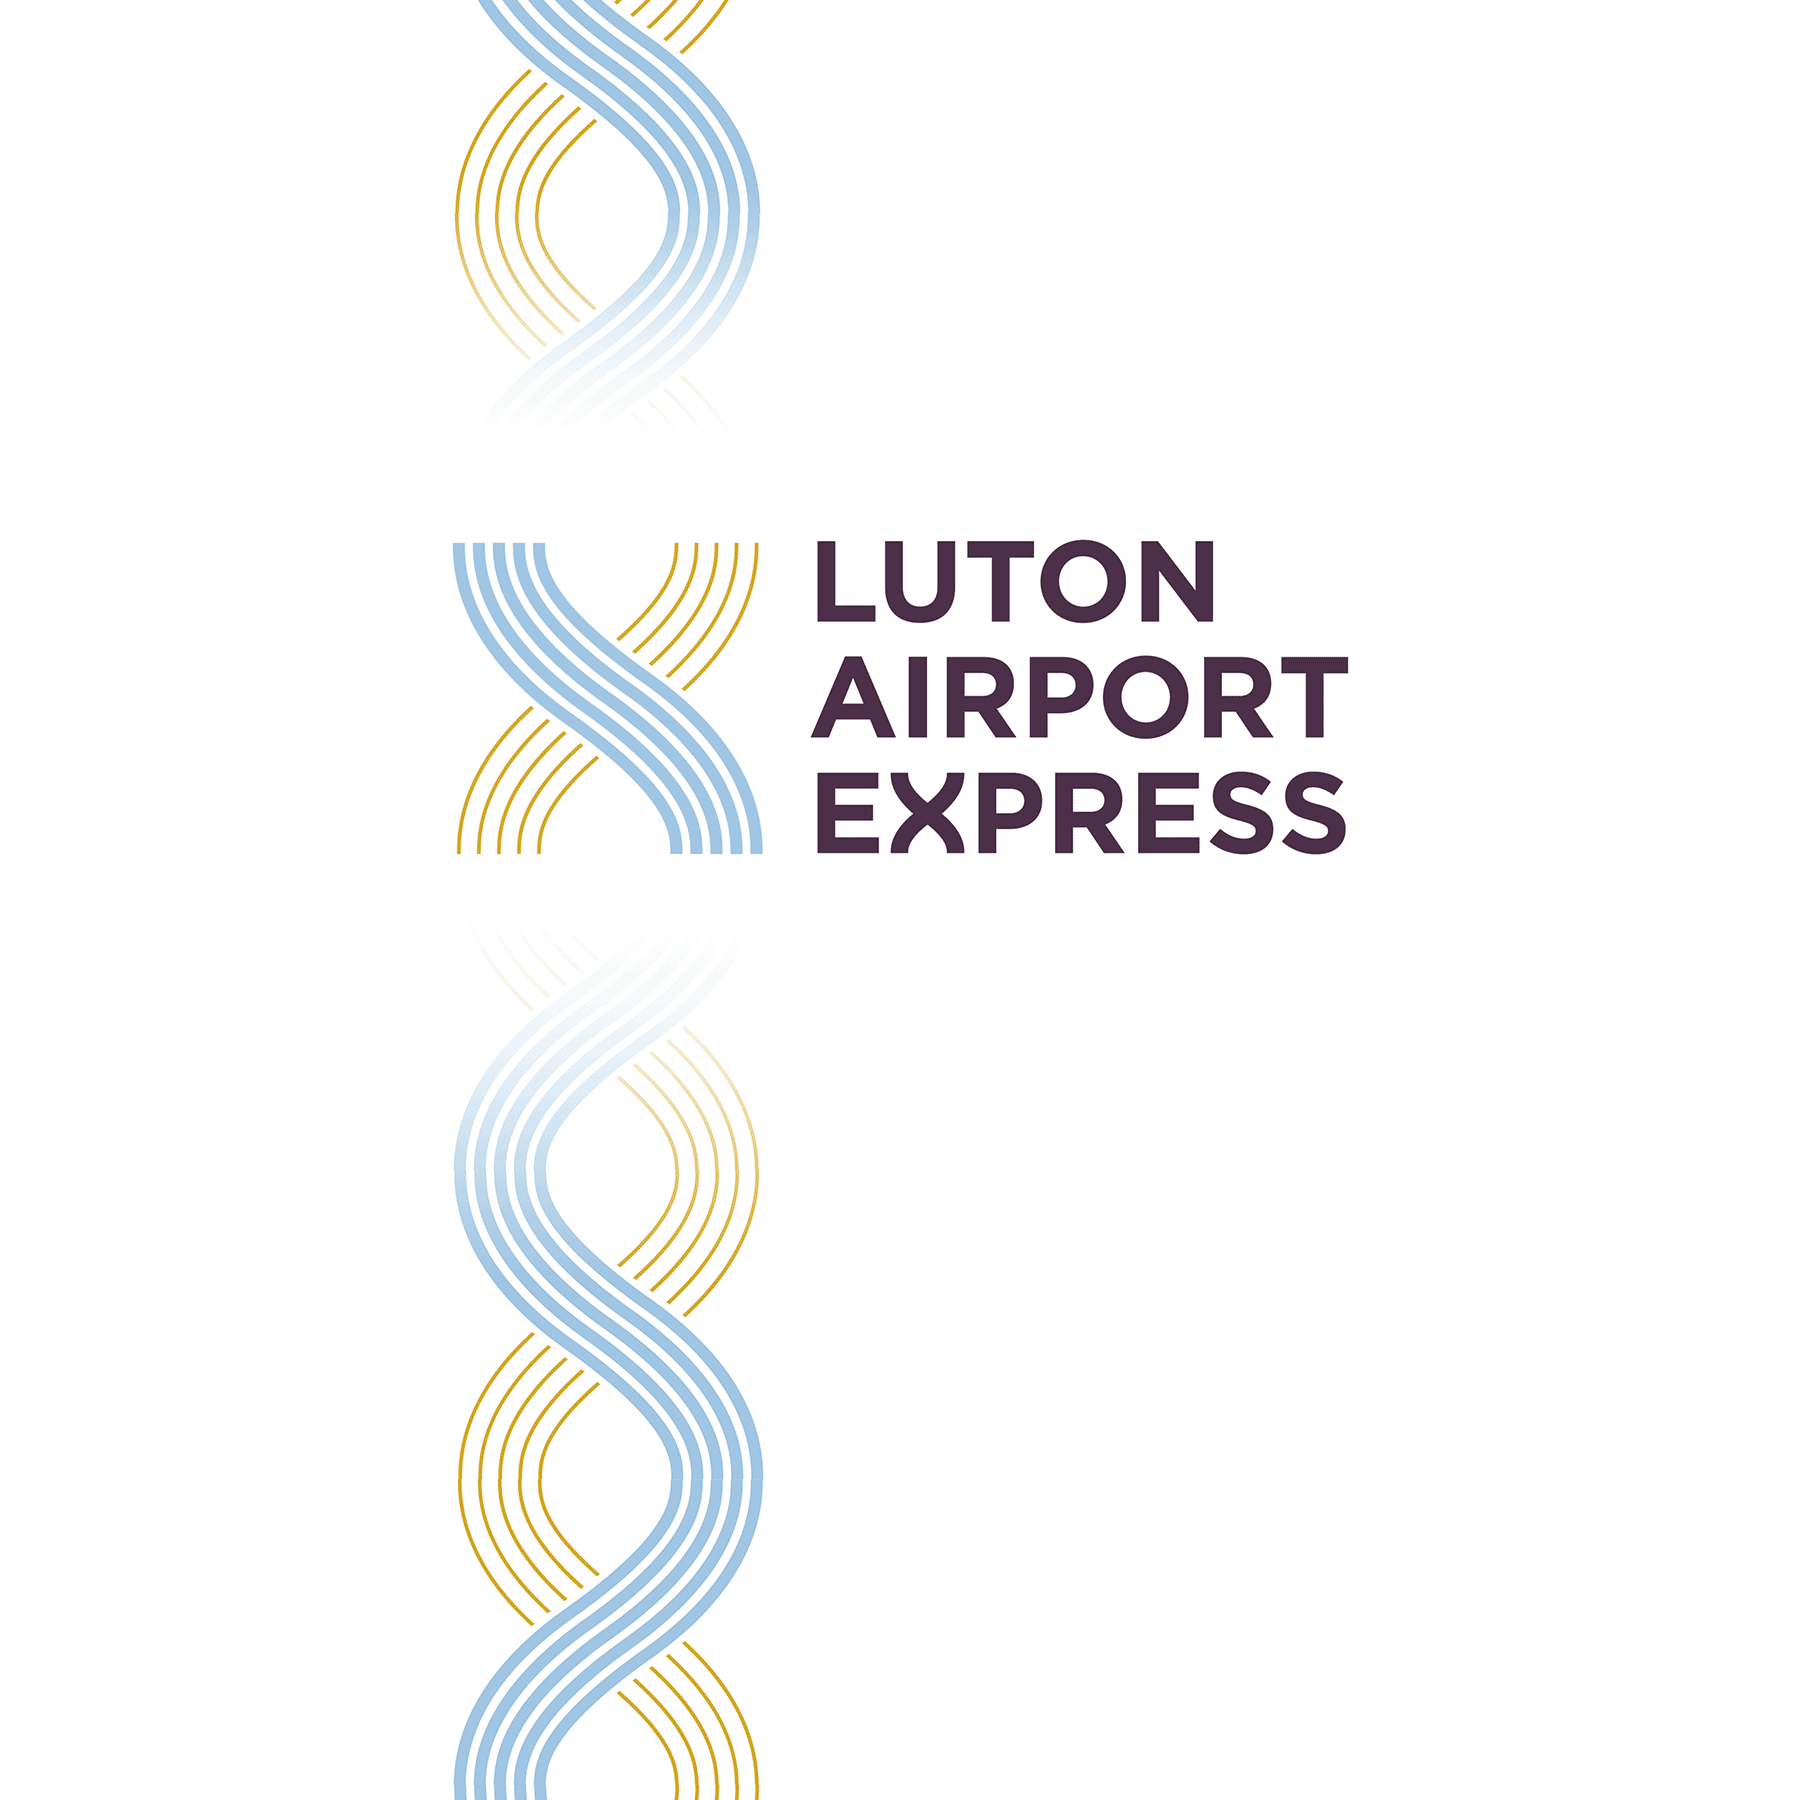 Luton Airport Express